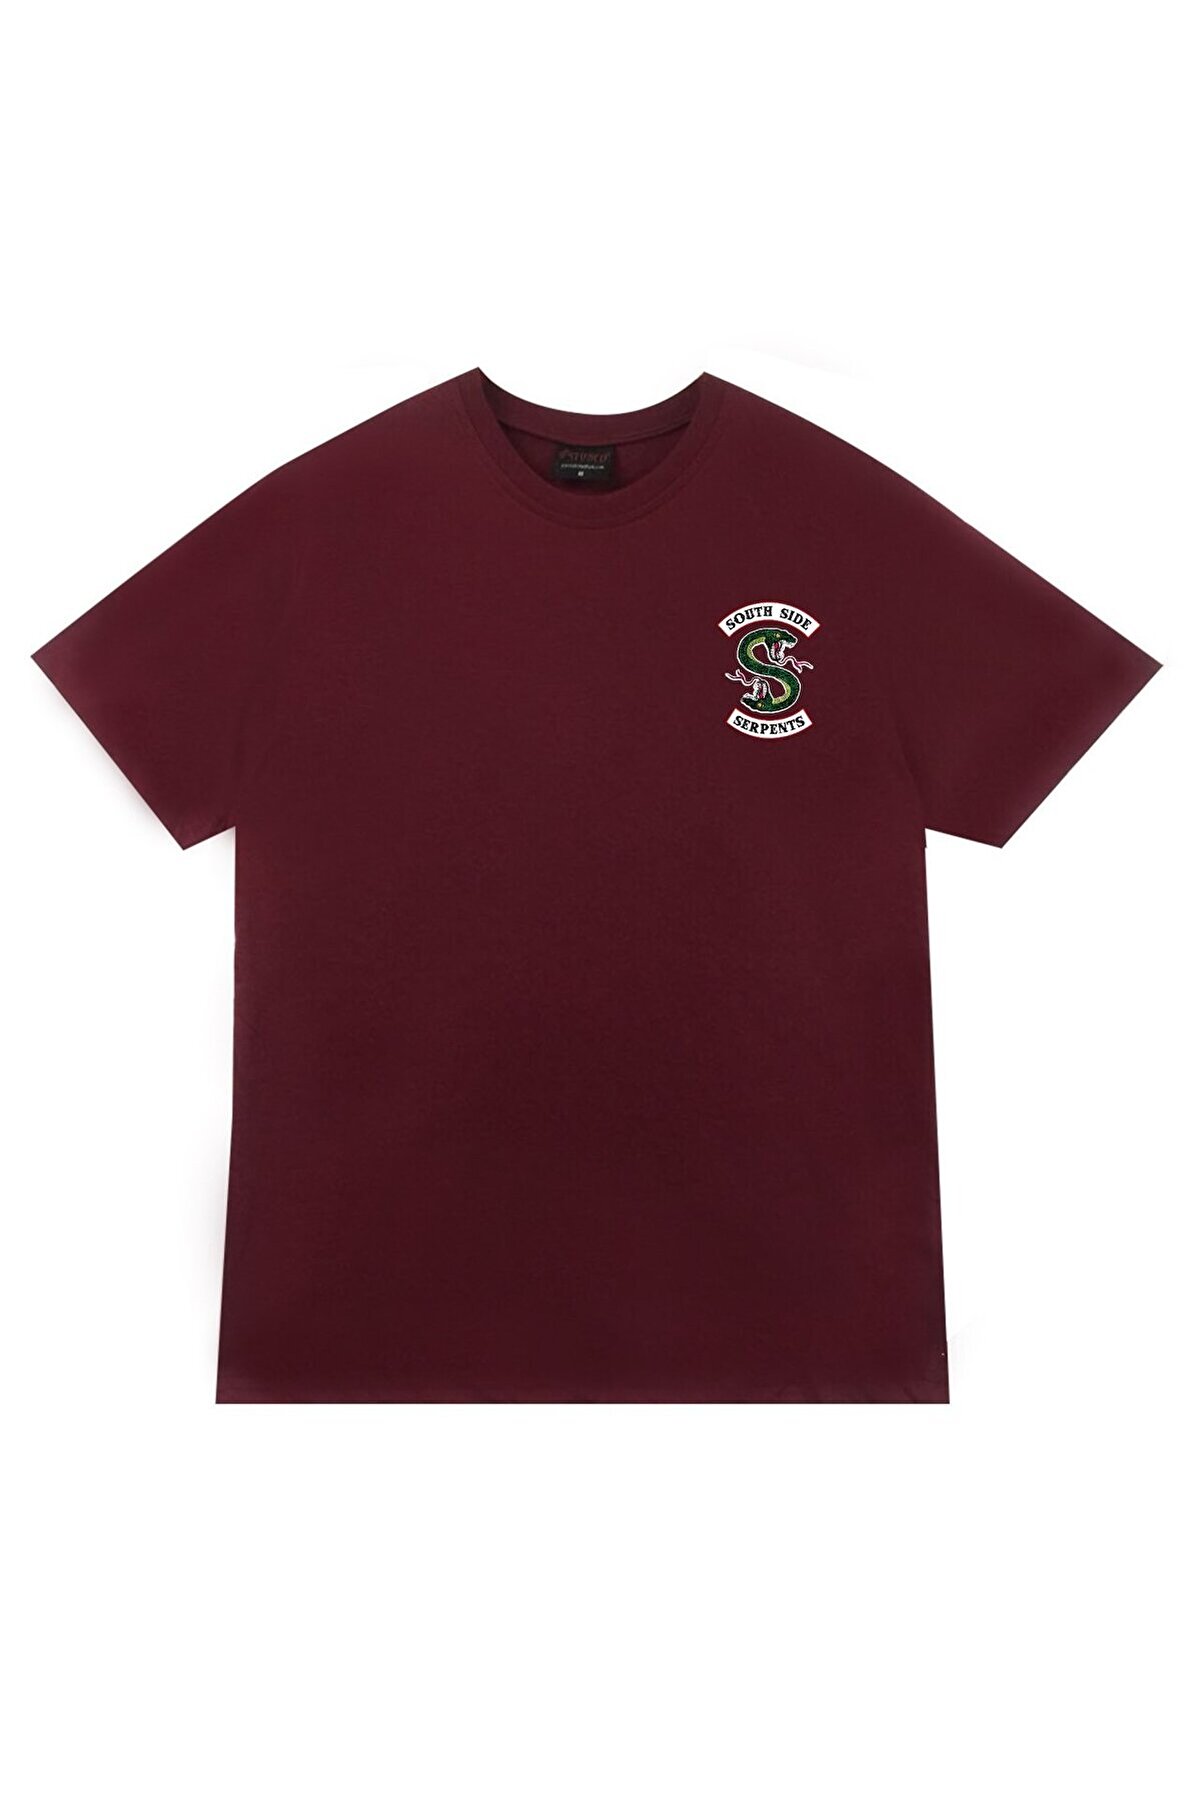 fame-stoned Unisex Bordo Riverdale Southside Serpents Baskılı T-shirt